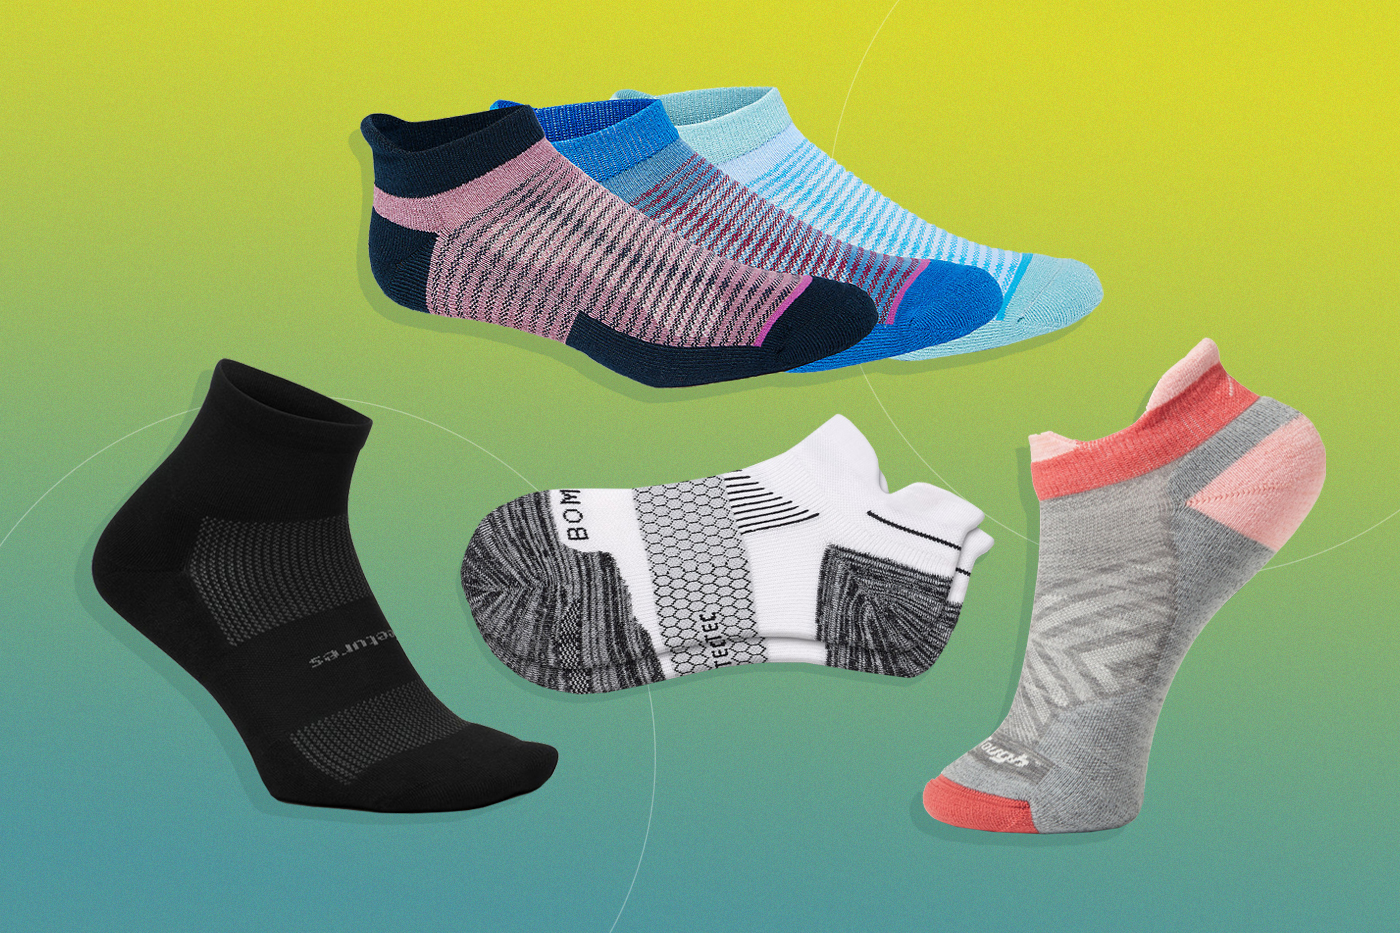 7 Best Performance Running Socks in 2022 - Running Sock Reviews